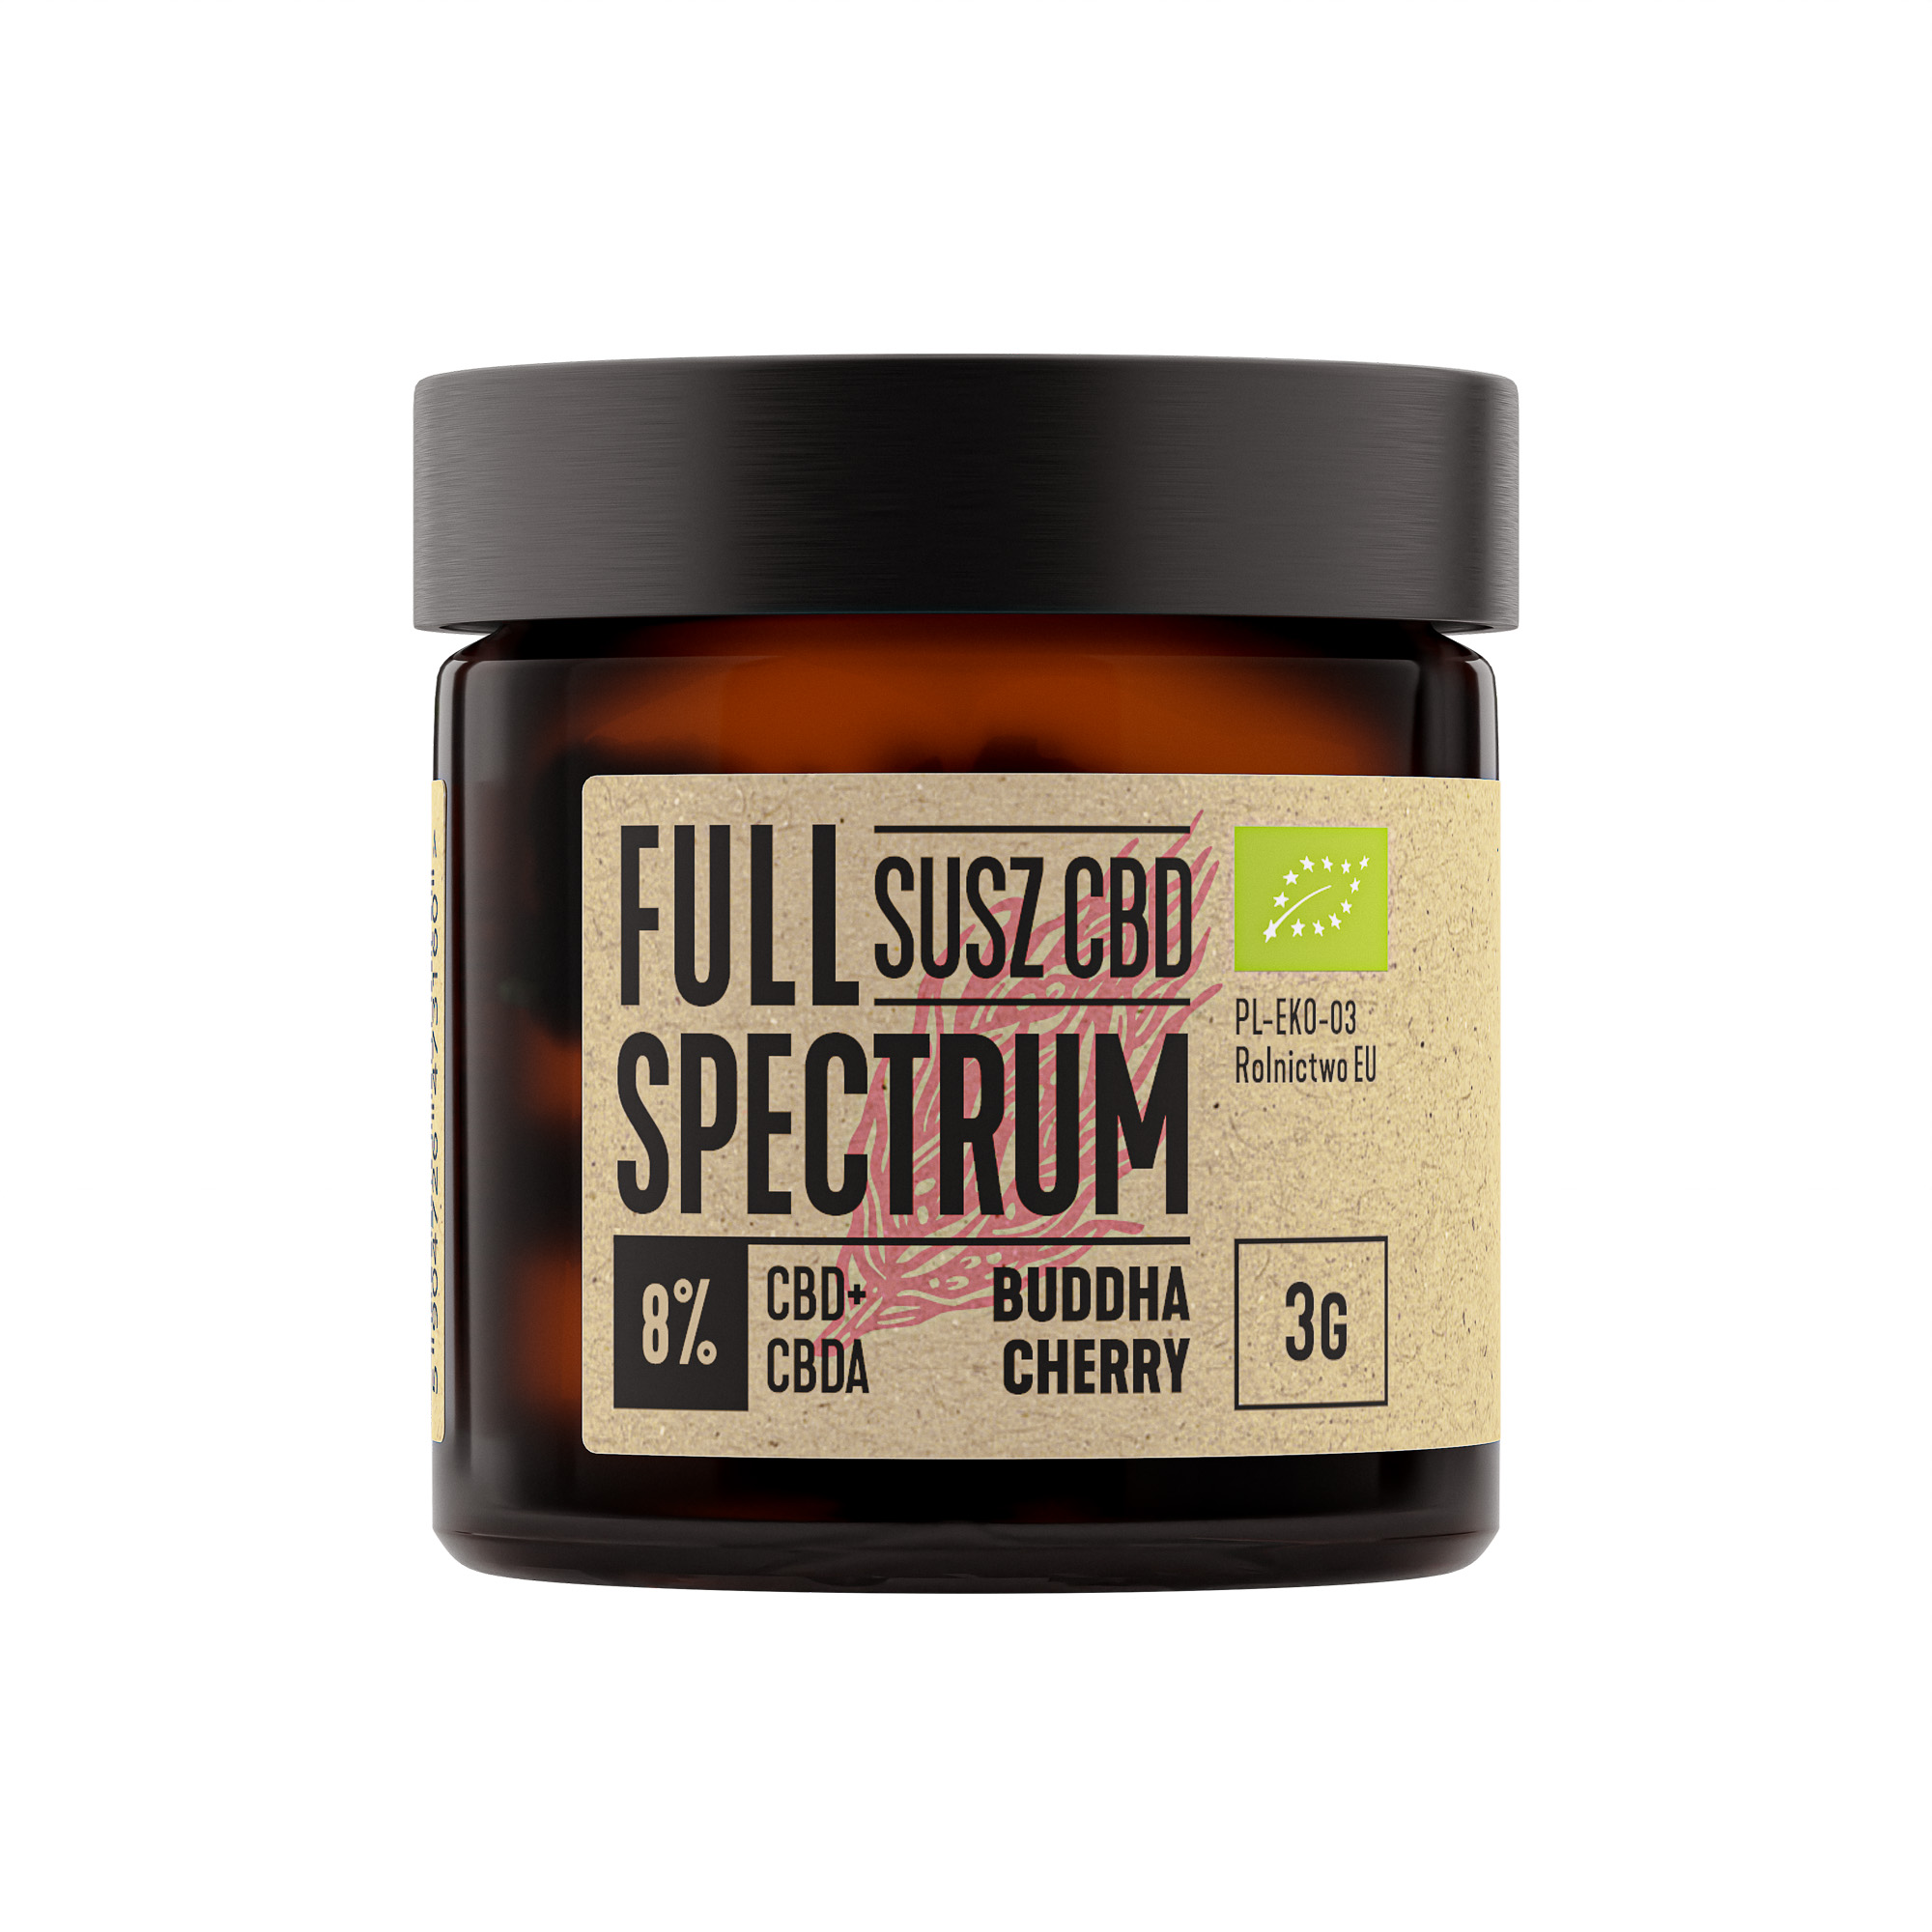 Full Spectrum Budda Cherry CBD >8% 3 g